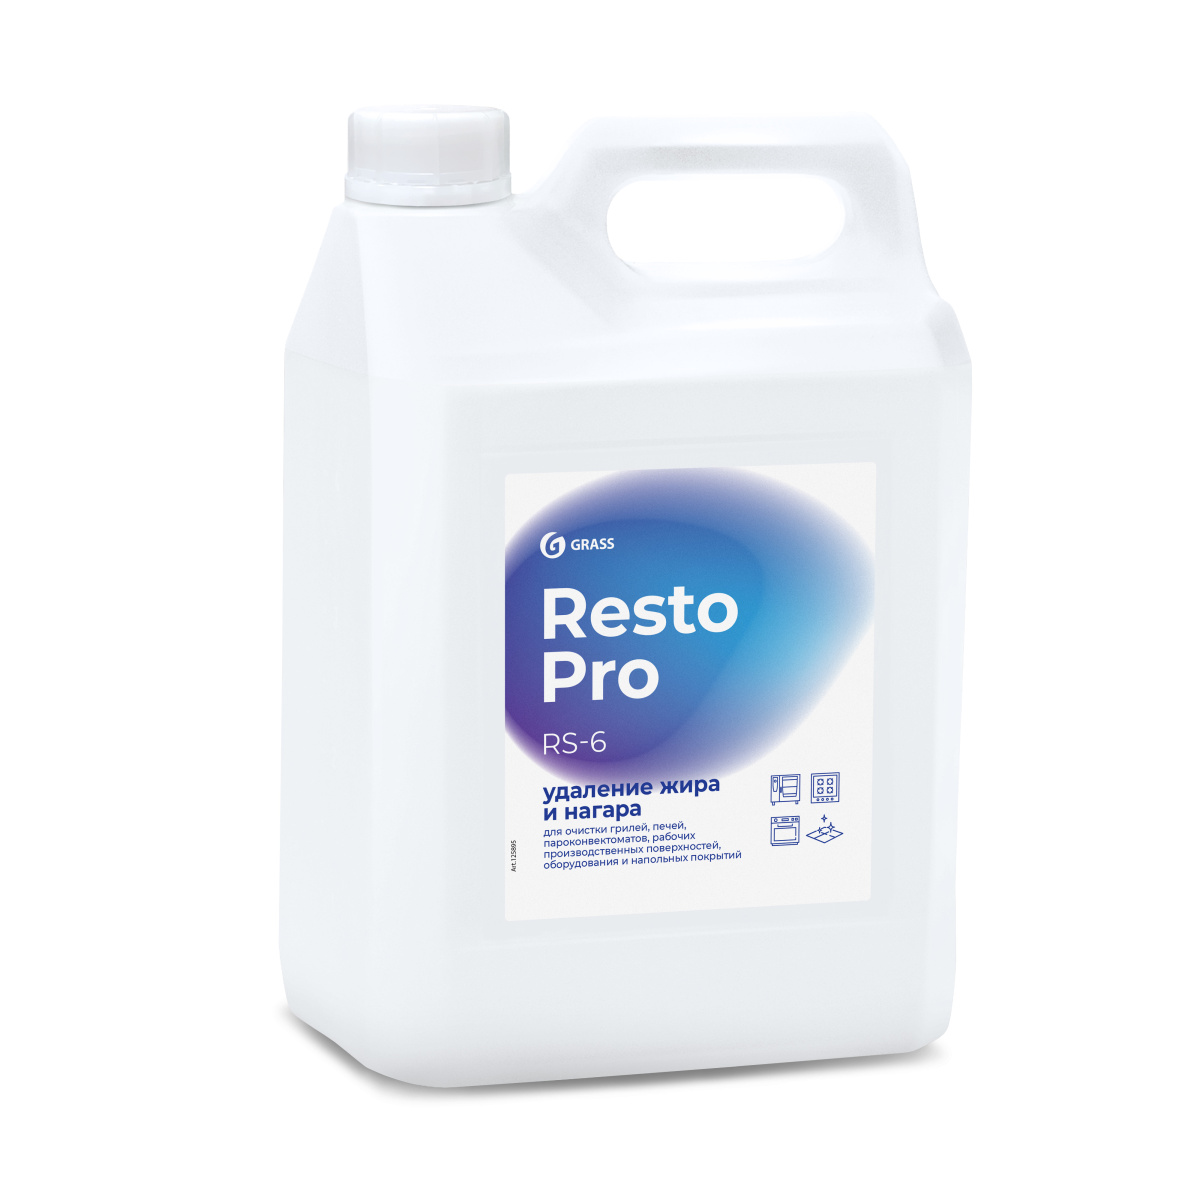 Resto Pro RS-6 Средство для удаления жира и нагара 5 л